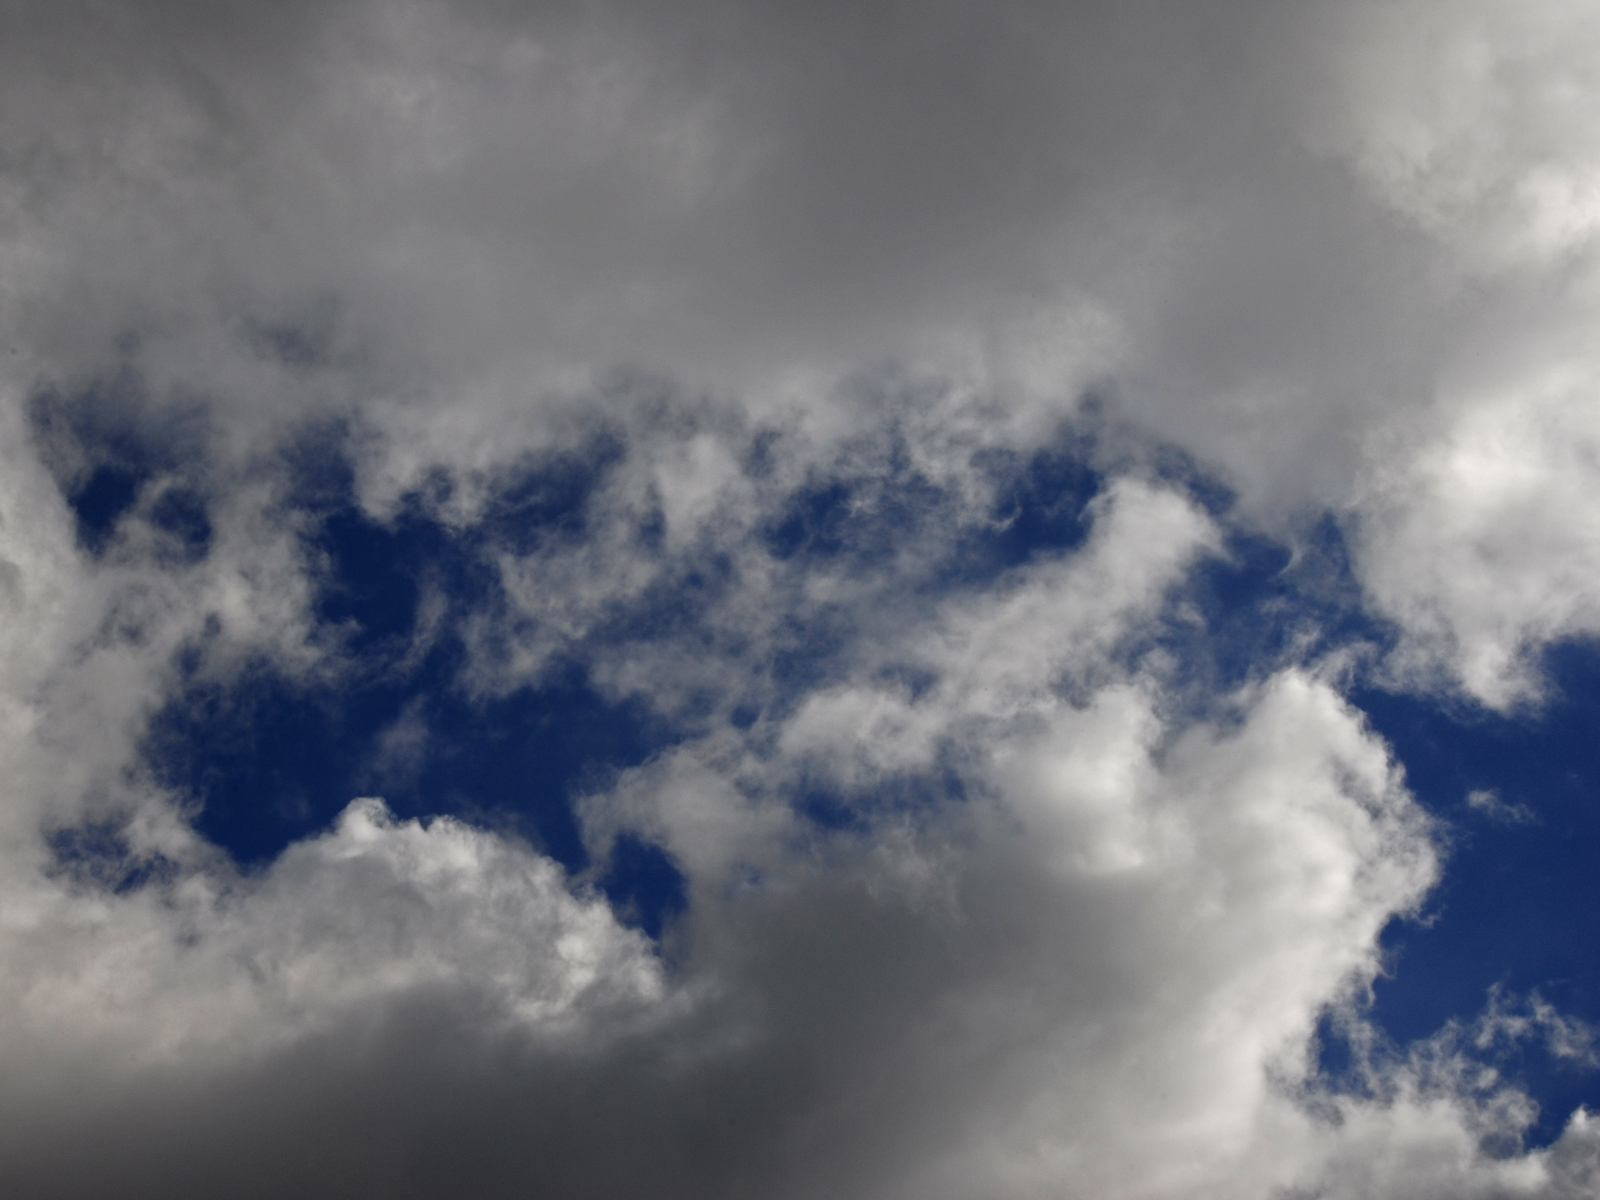 Rain cloud series (image 6 of 15) photo